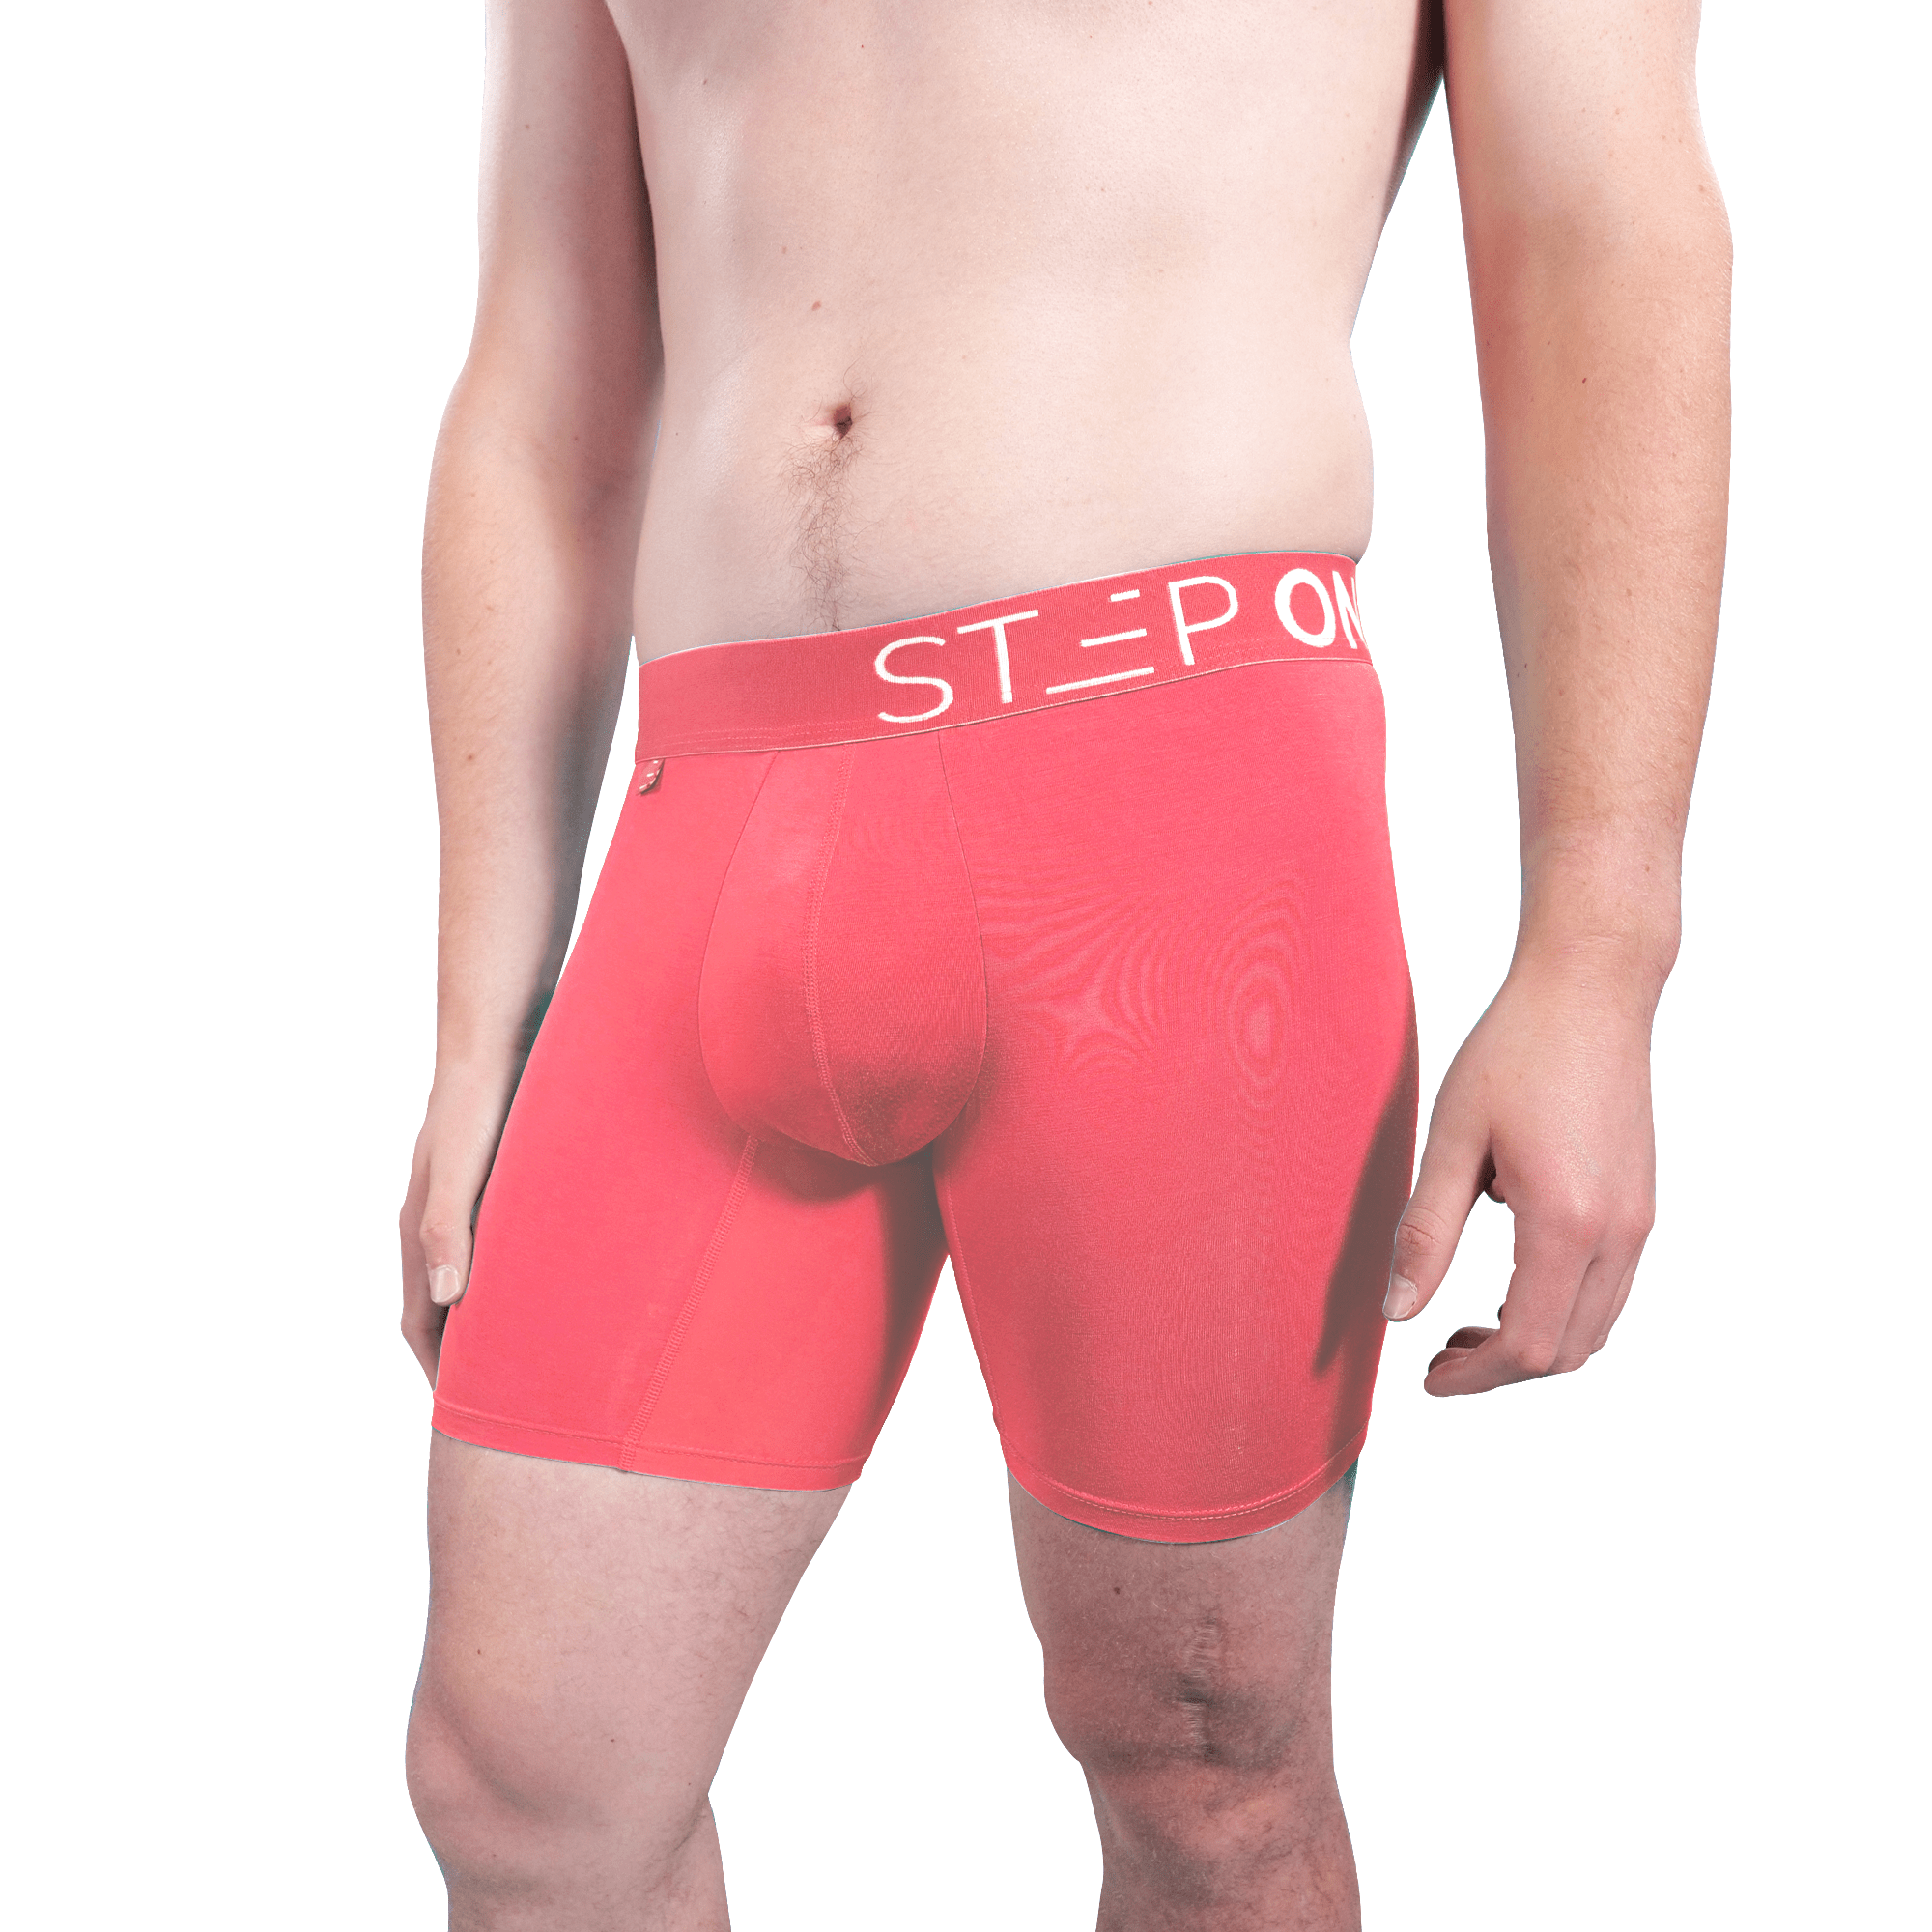 Buy STEP ONE Mens Boxers Underwear for Men, Moisture-Wicking Mens